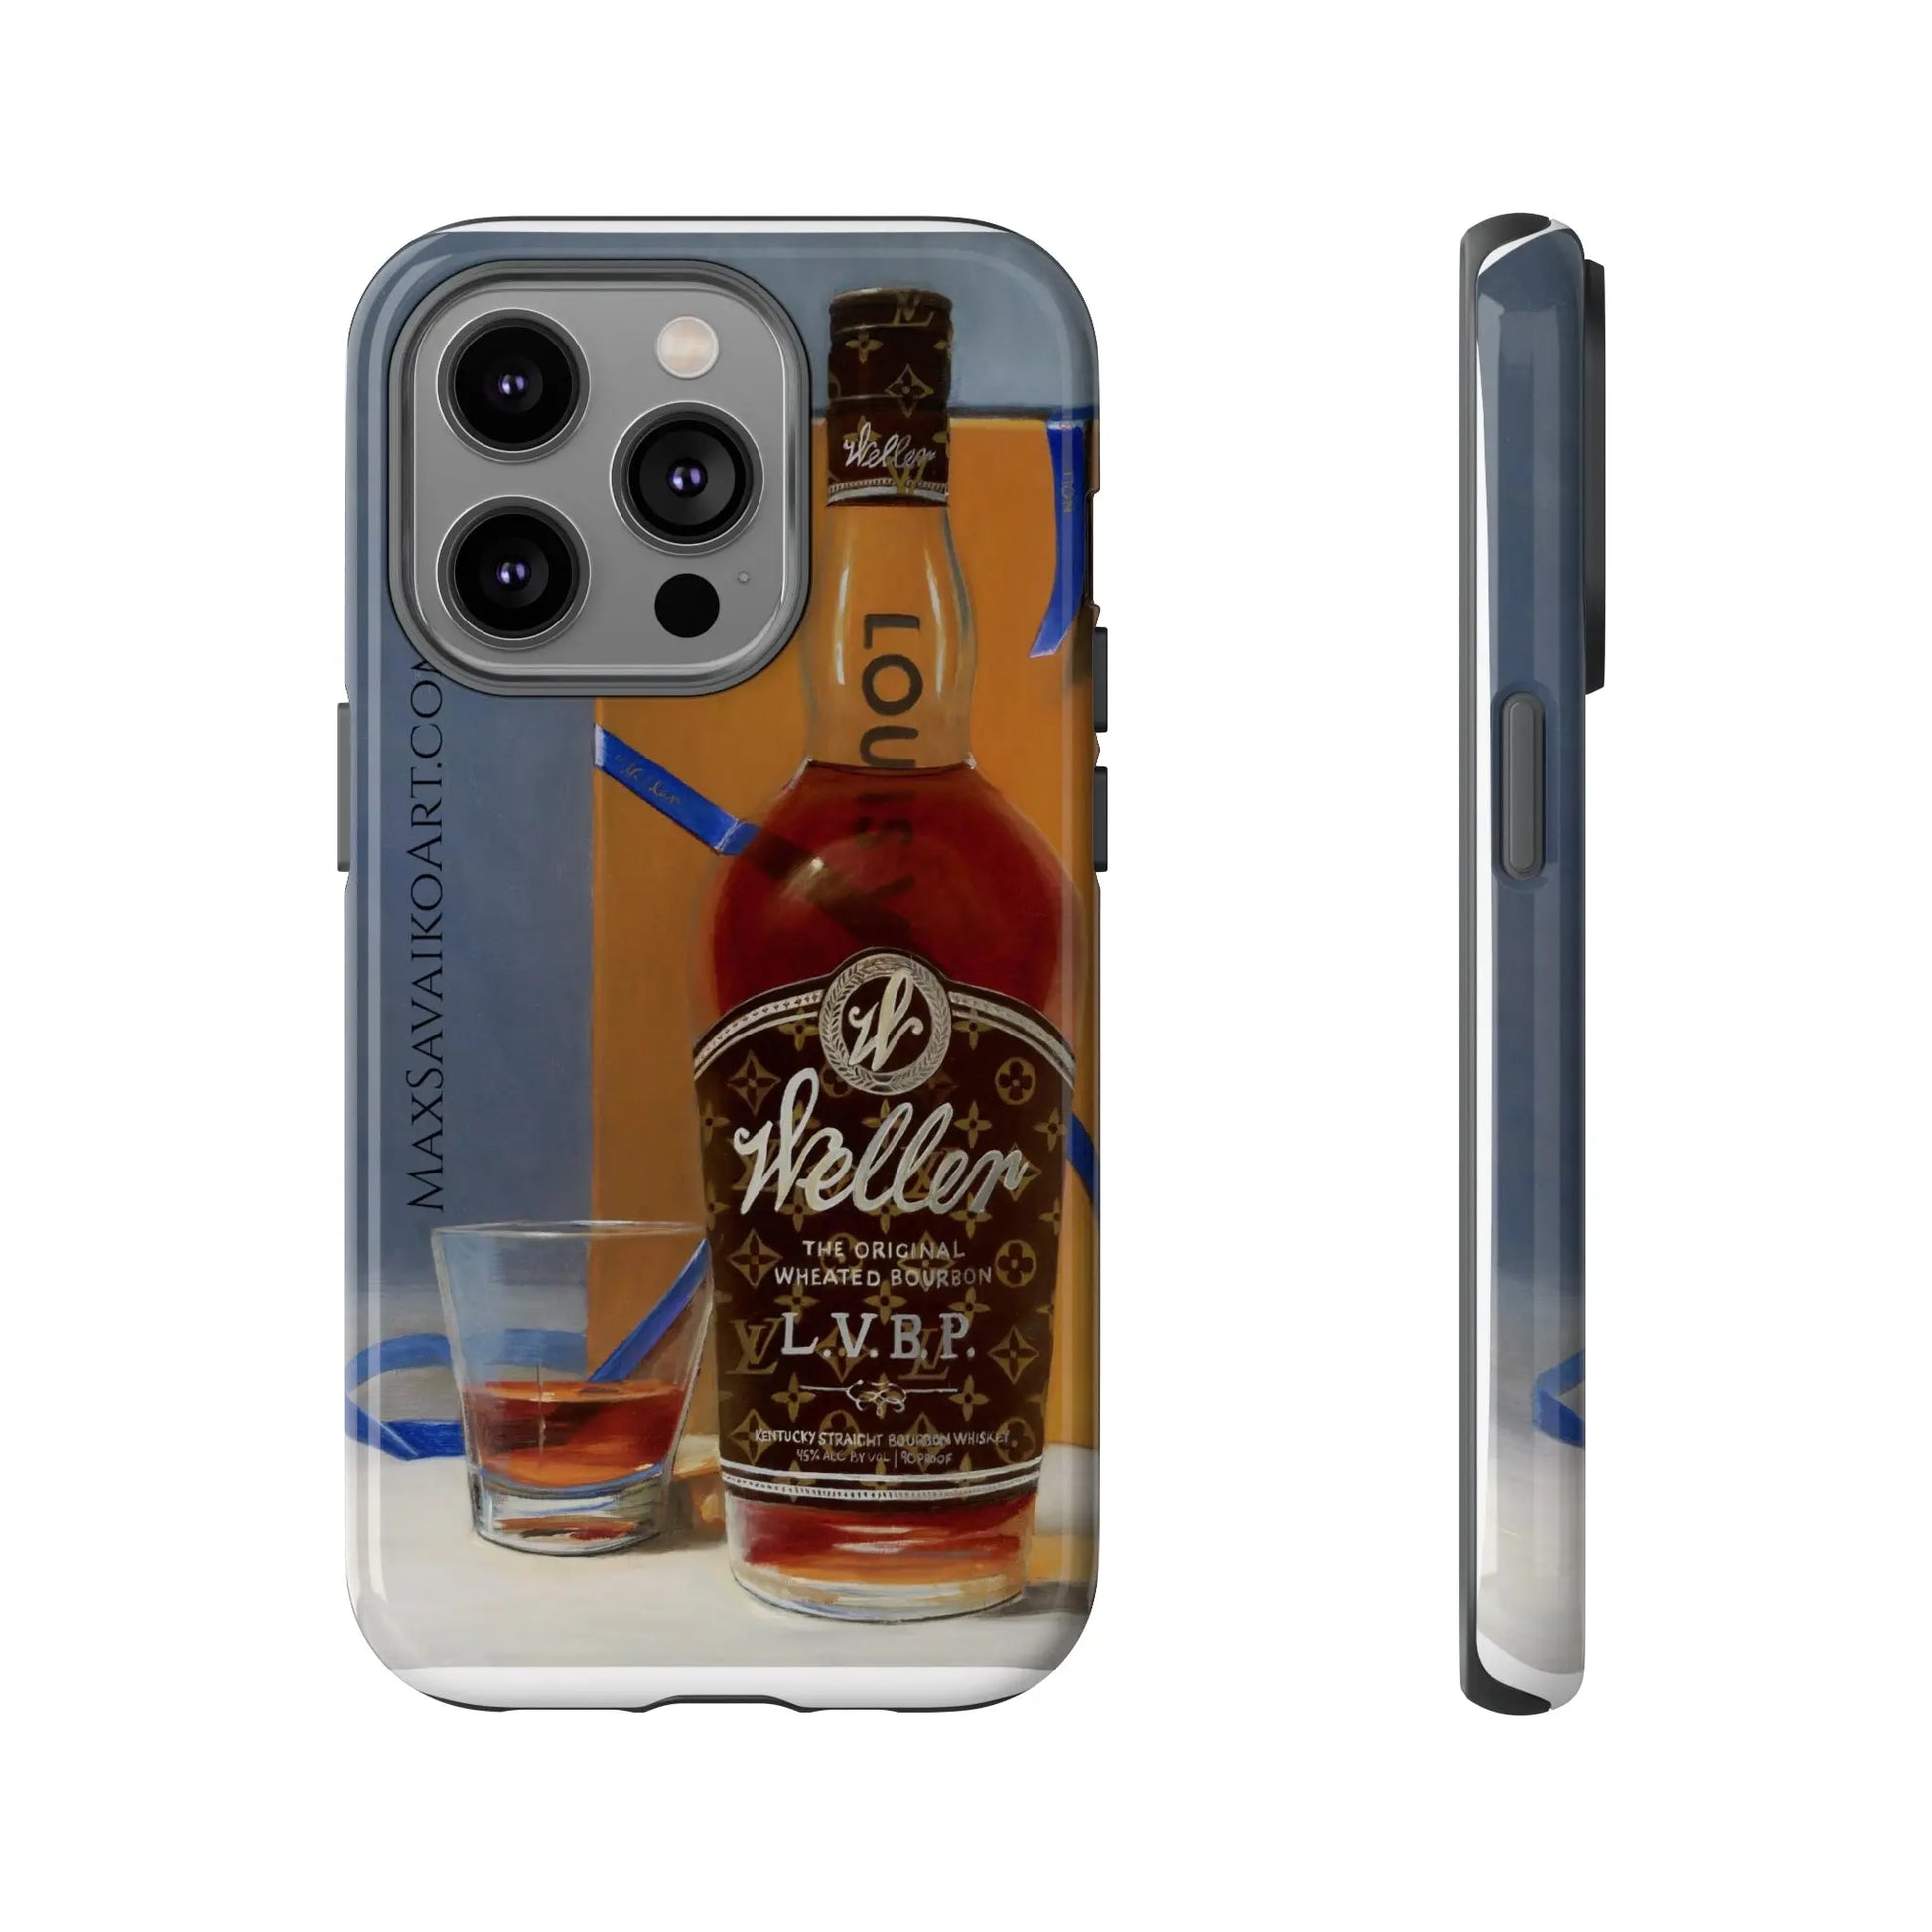 Weller Bourbon iPhone case samsung case louis vuitton 